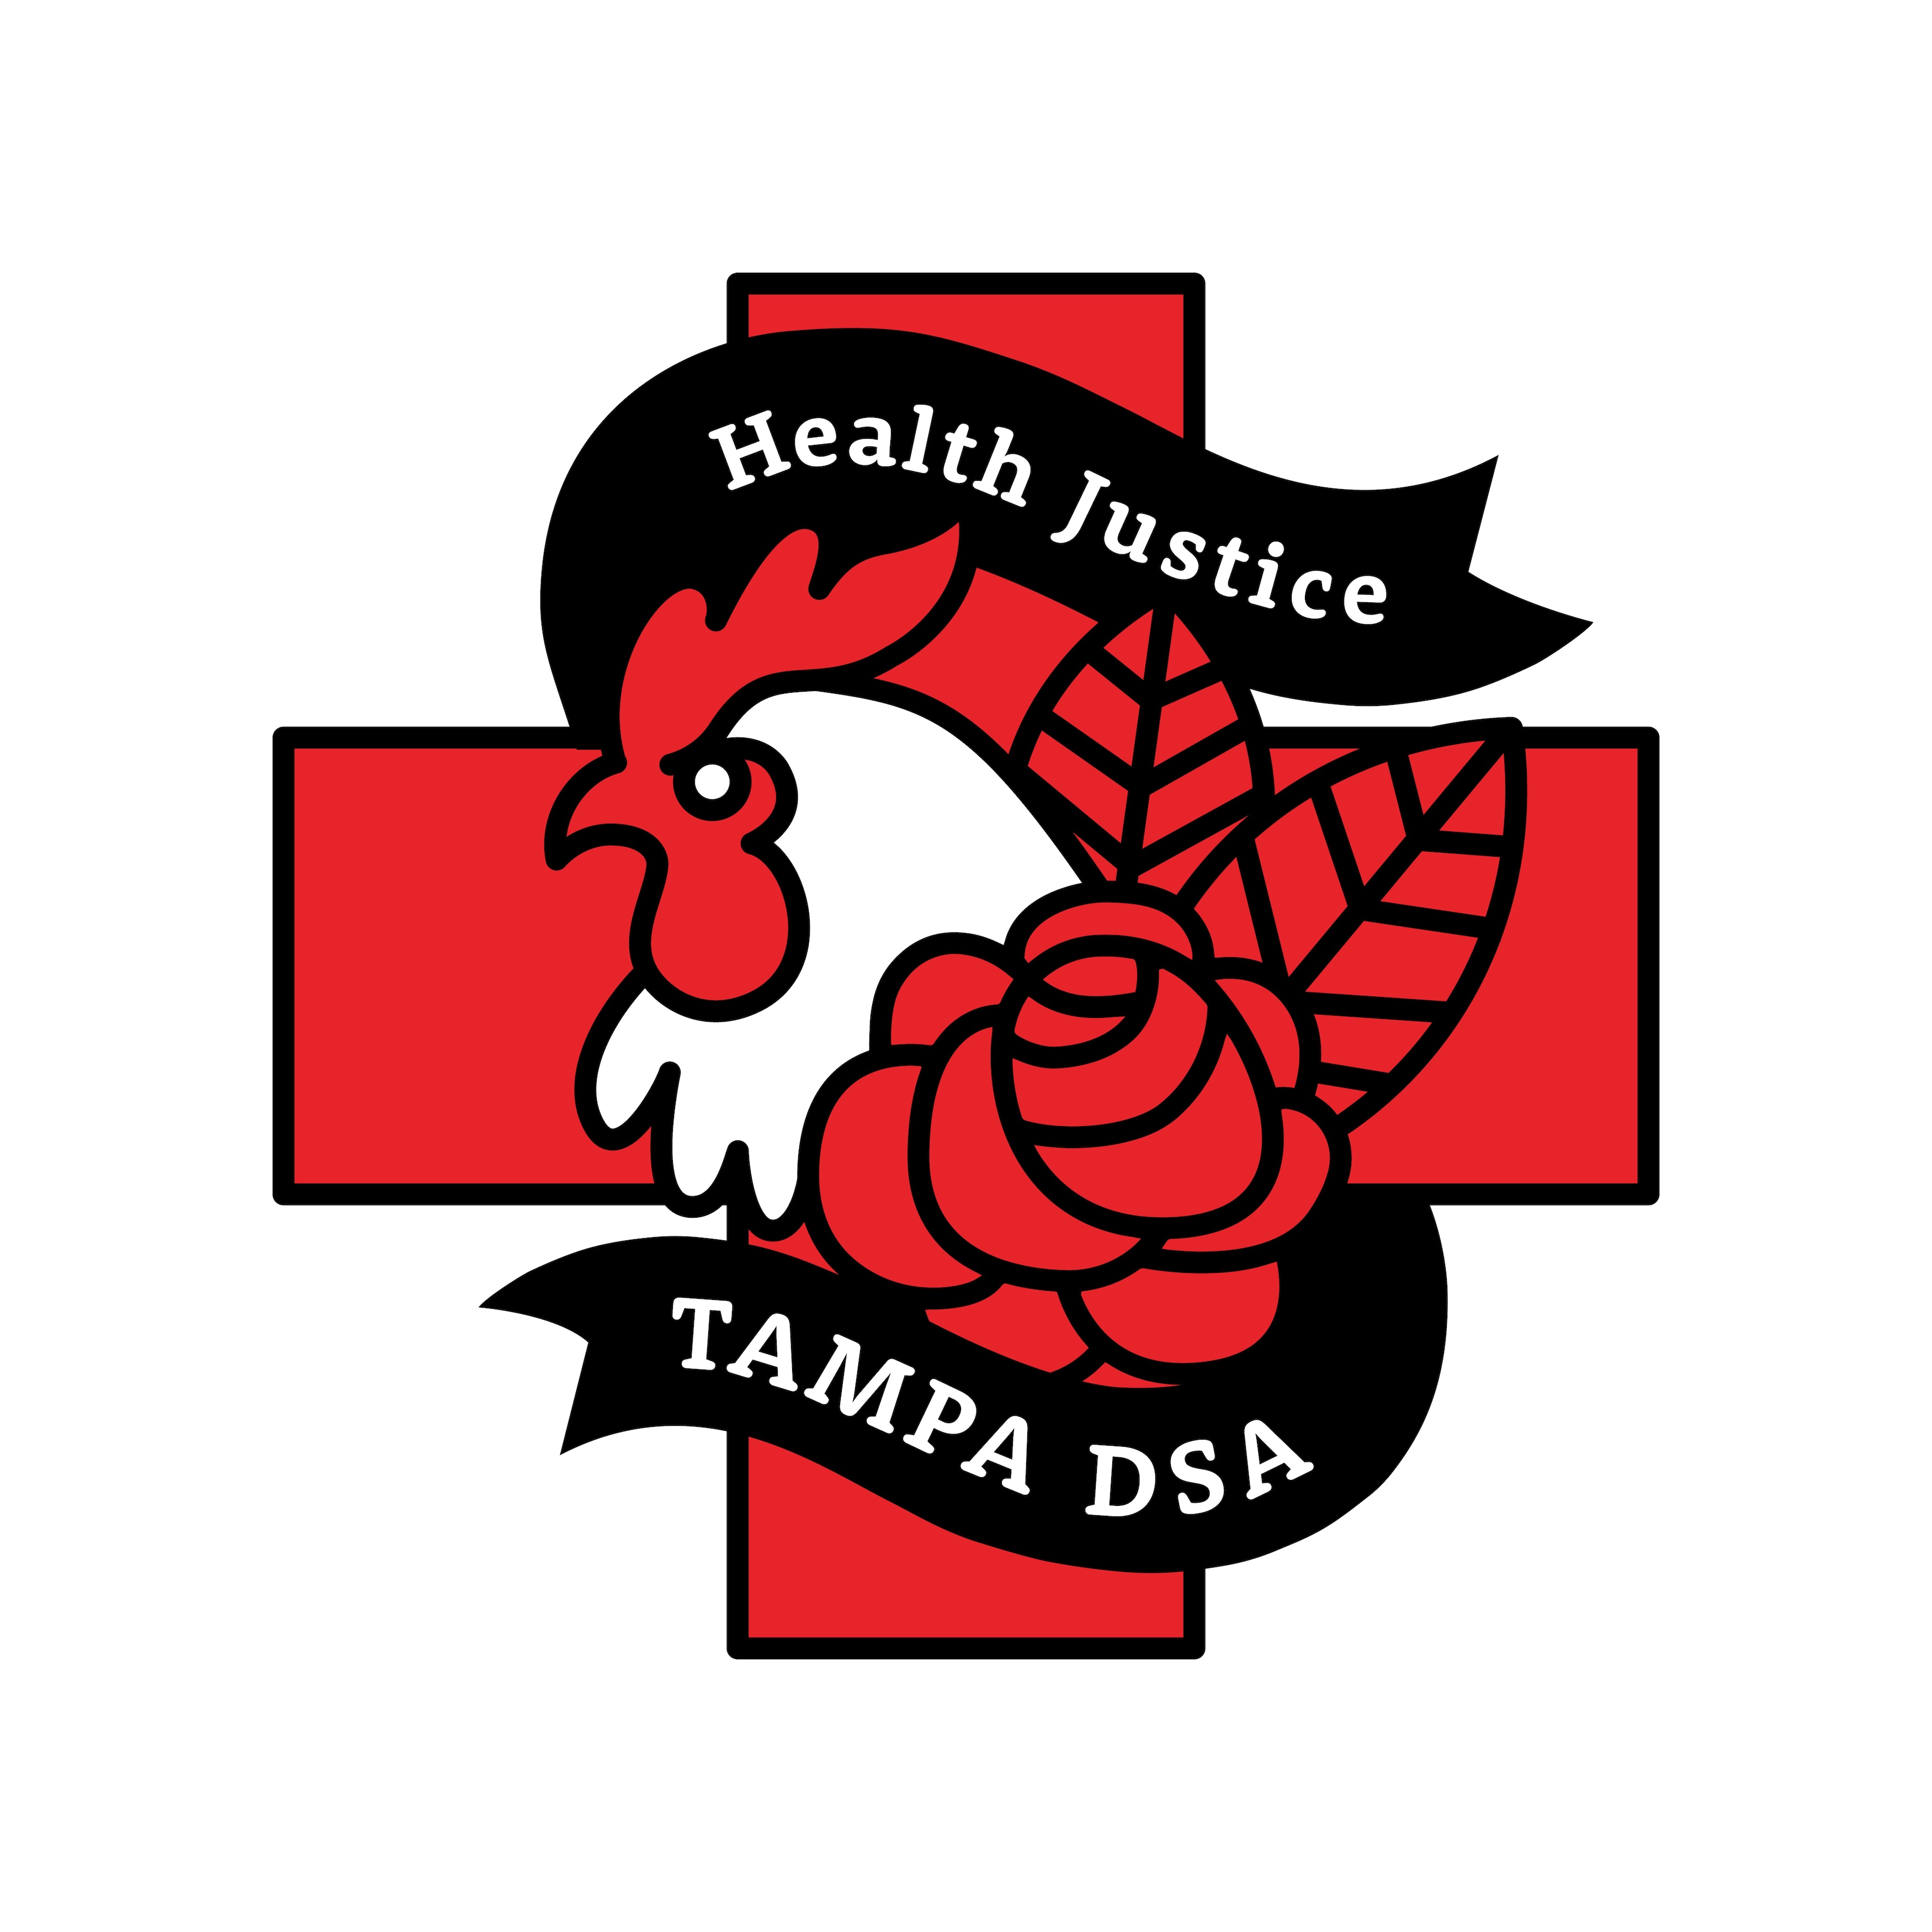 Tampa Democratic Socialists of America logo